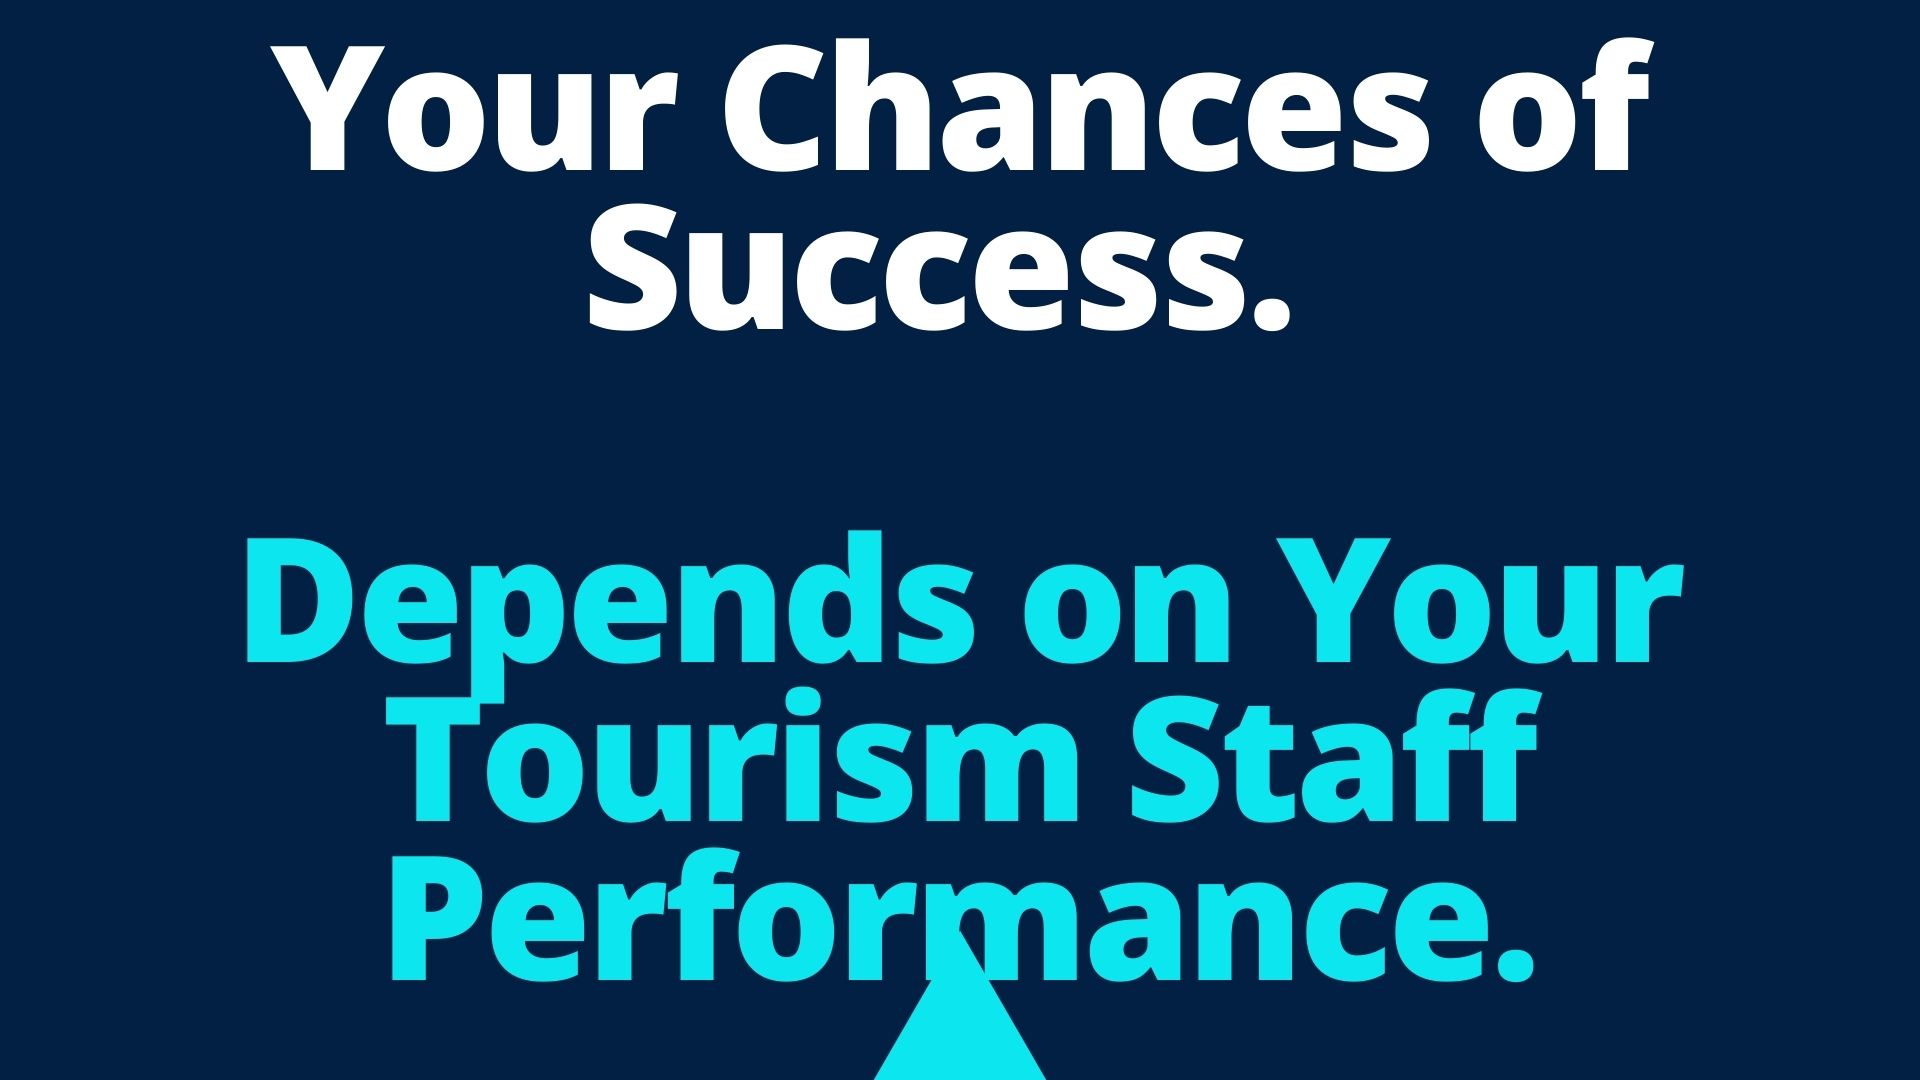 Tourism Staff Performance